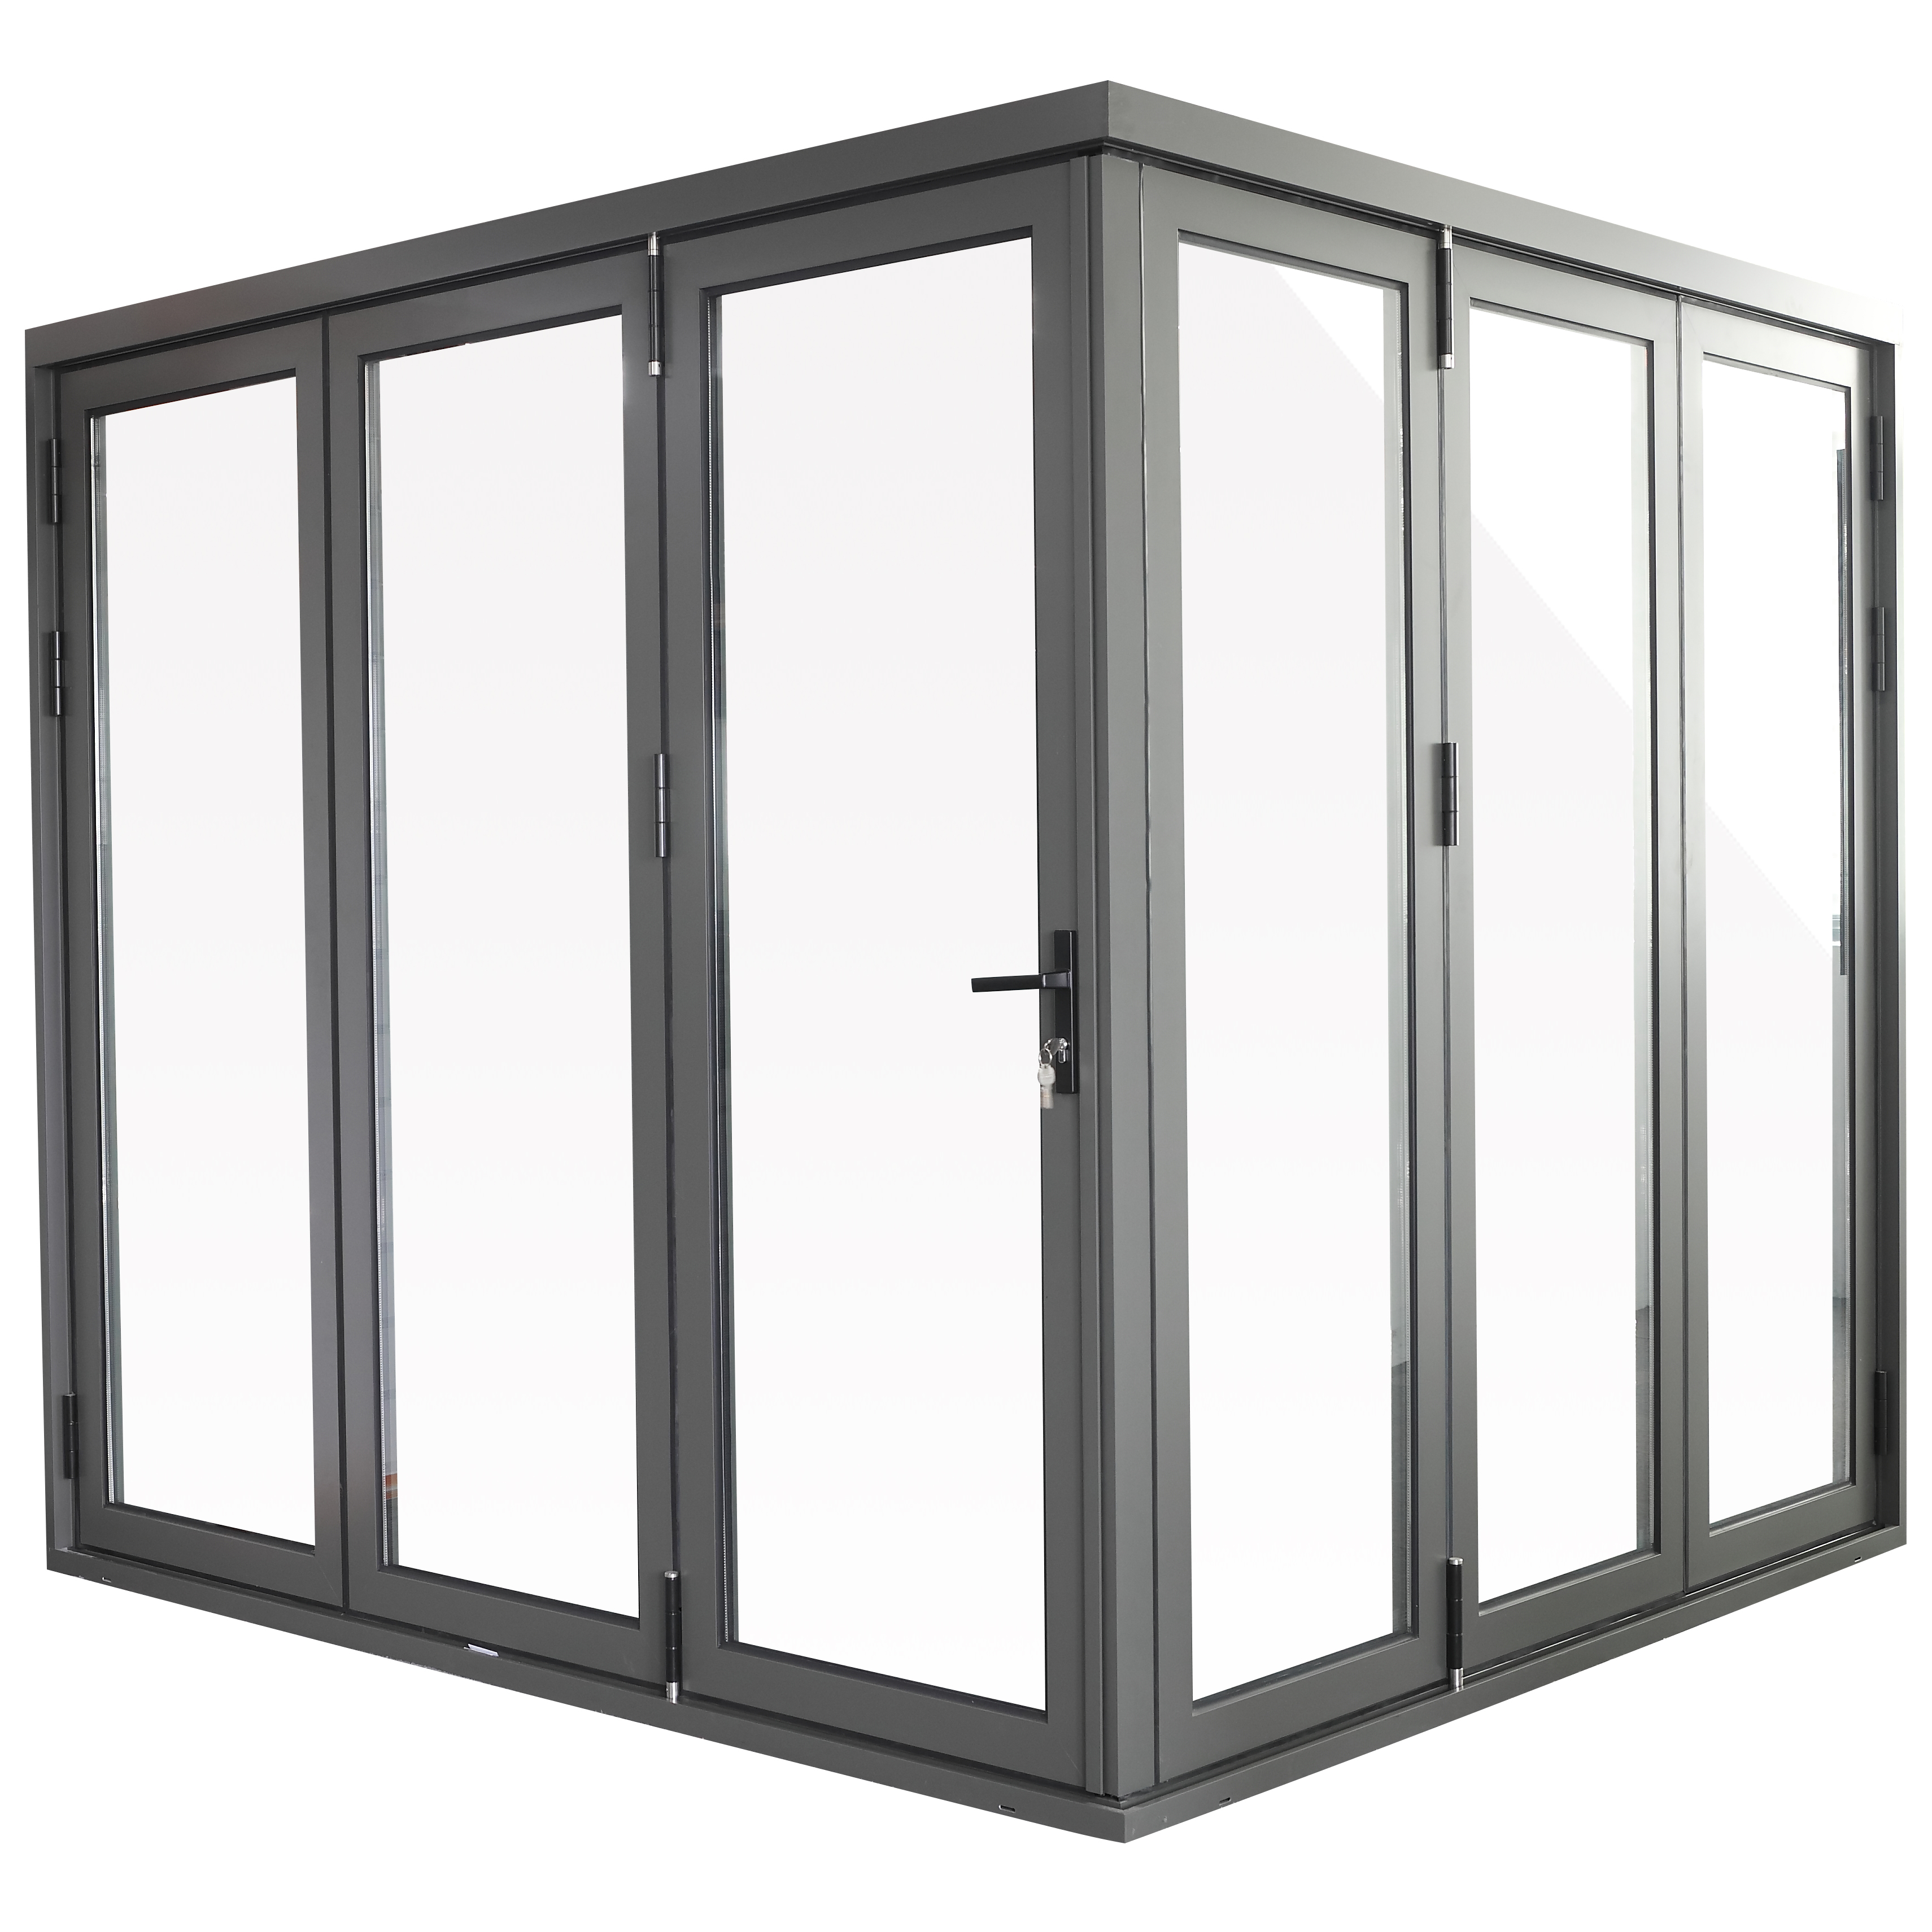 Milgard bi-fold glass doors